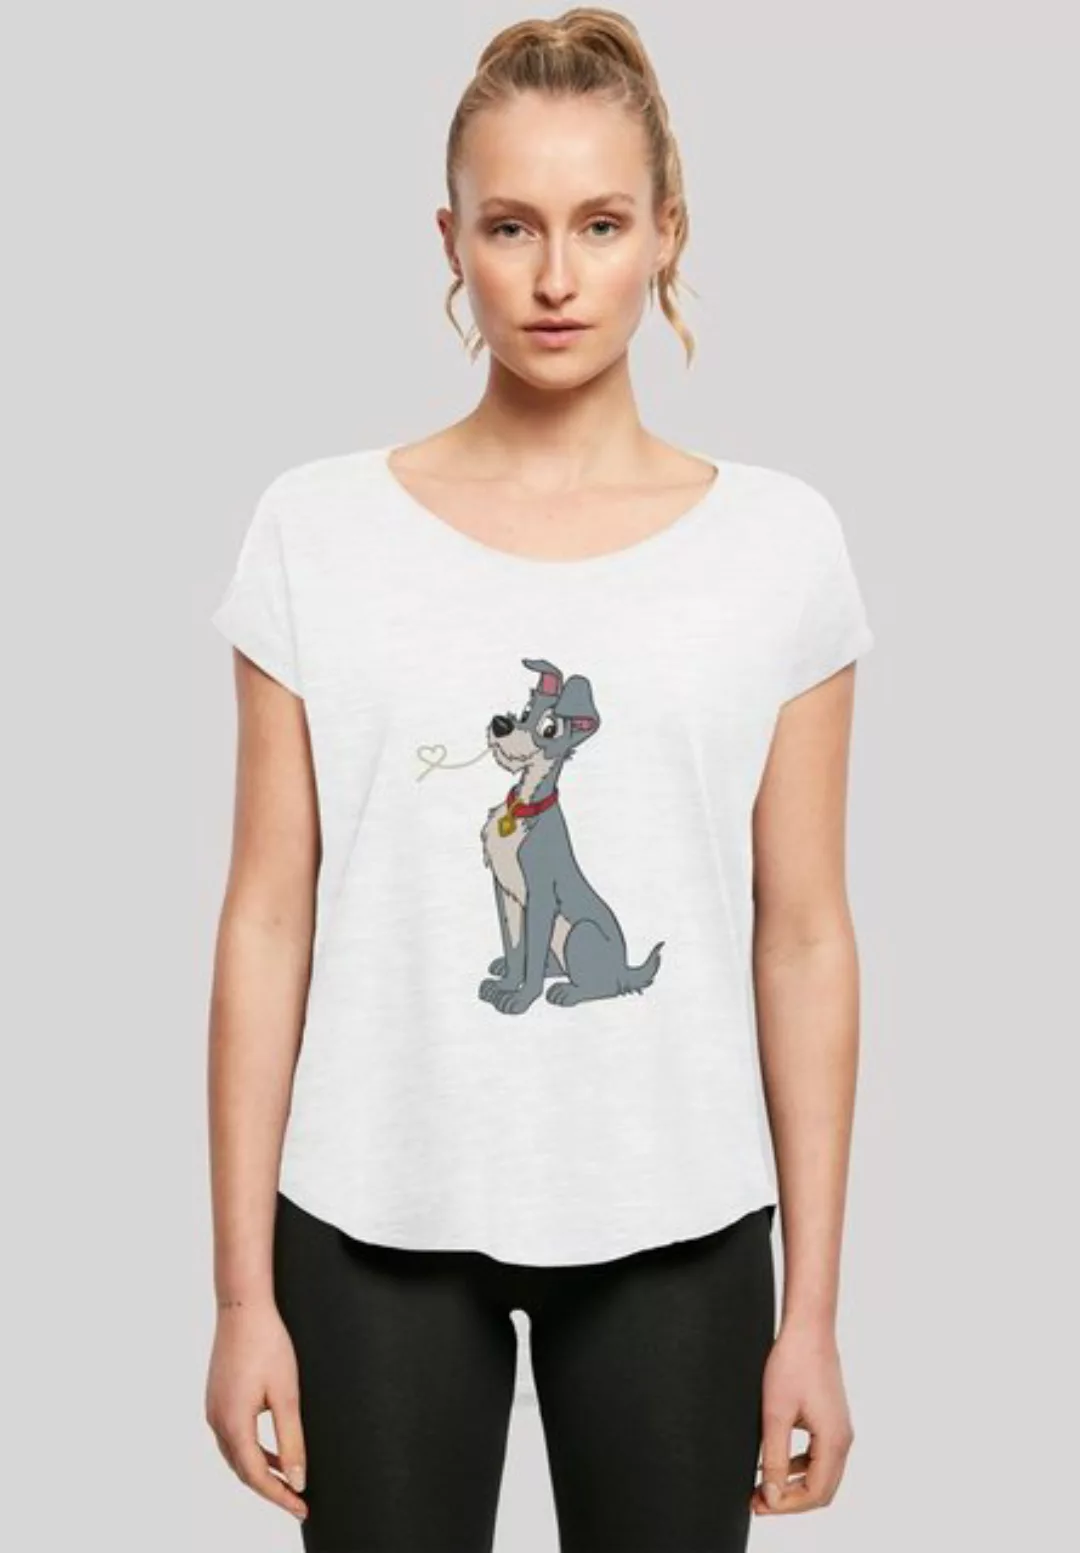 F4NT4STIC T-Shirt "Disney Arielle die Meerjungfrau Sebastian Bubbles", Prin günstig online kaufen